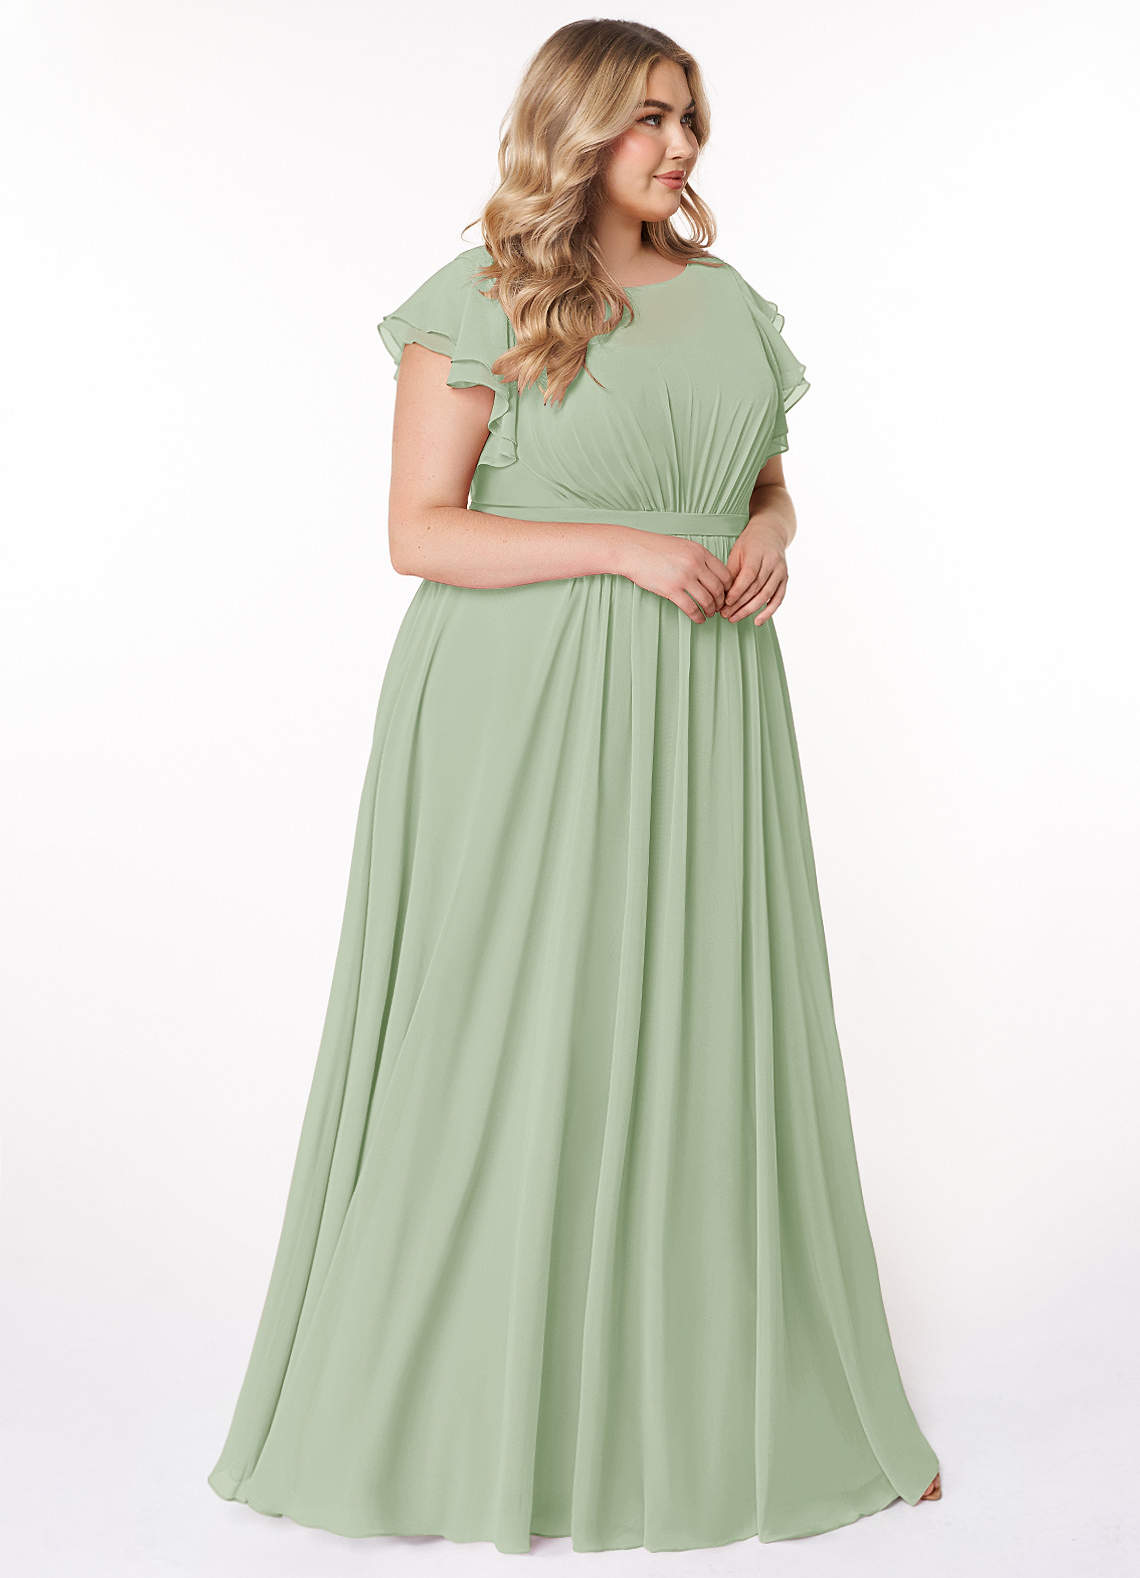 Azazie Daphne Modest Bridesmaid Dresses A-Line Ruffled Chiffon Floor-Length Dress image1